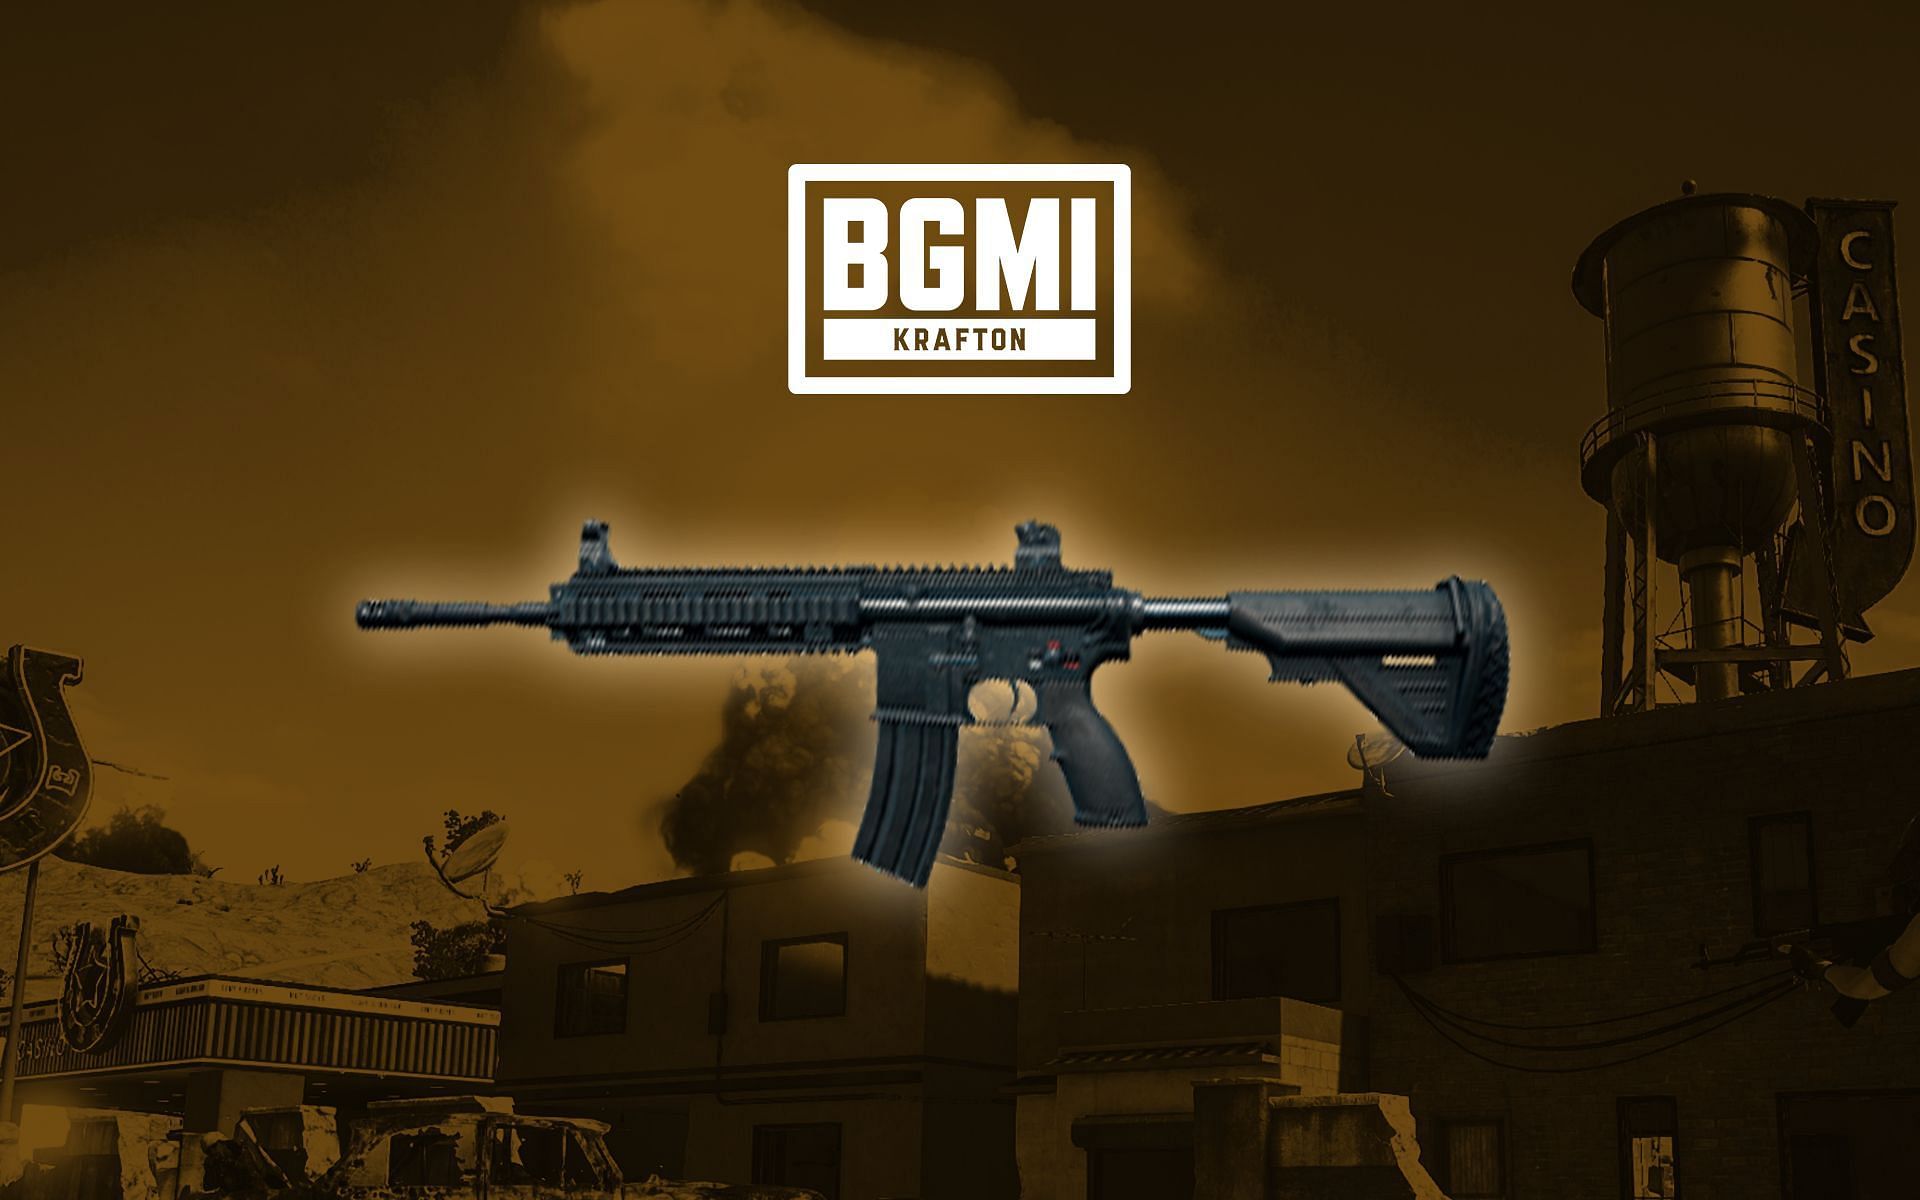 Going through different crates to find new gun skins in BGMI (Image via Sportskeeda)